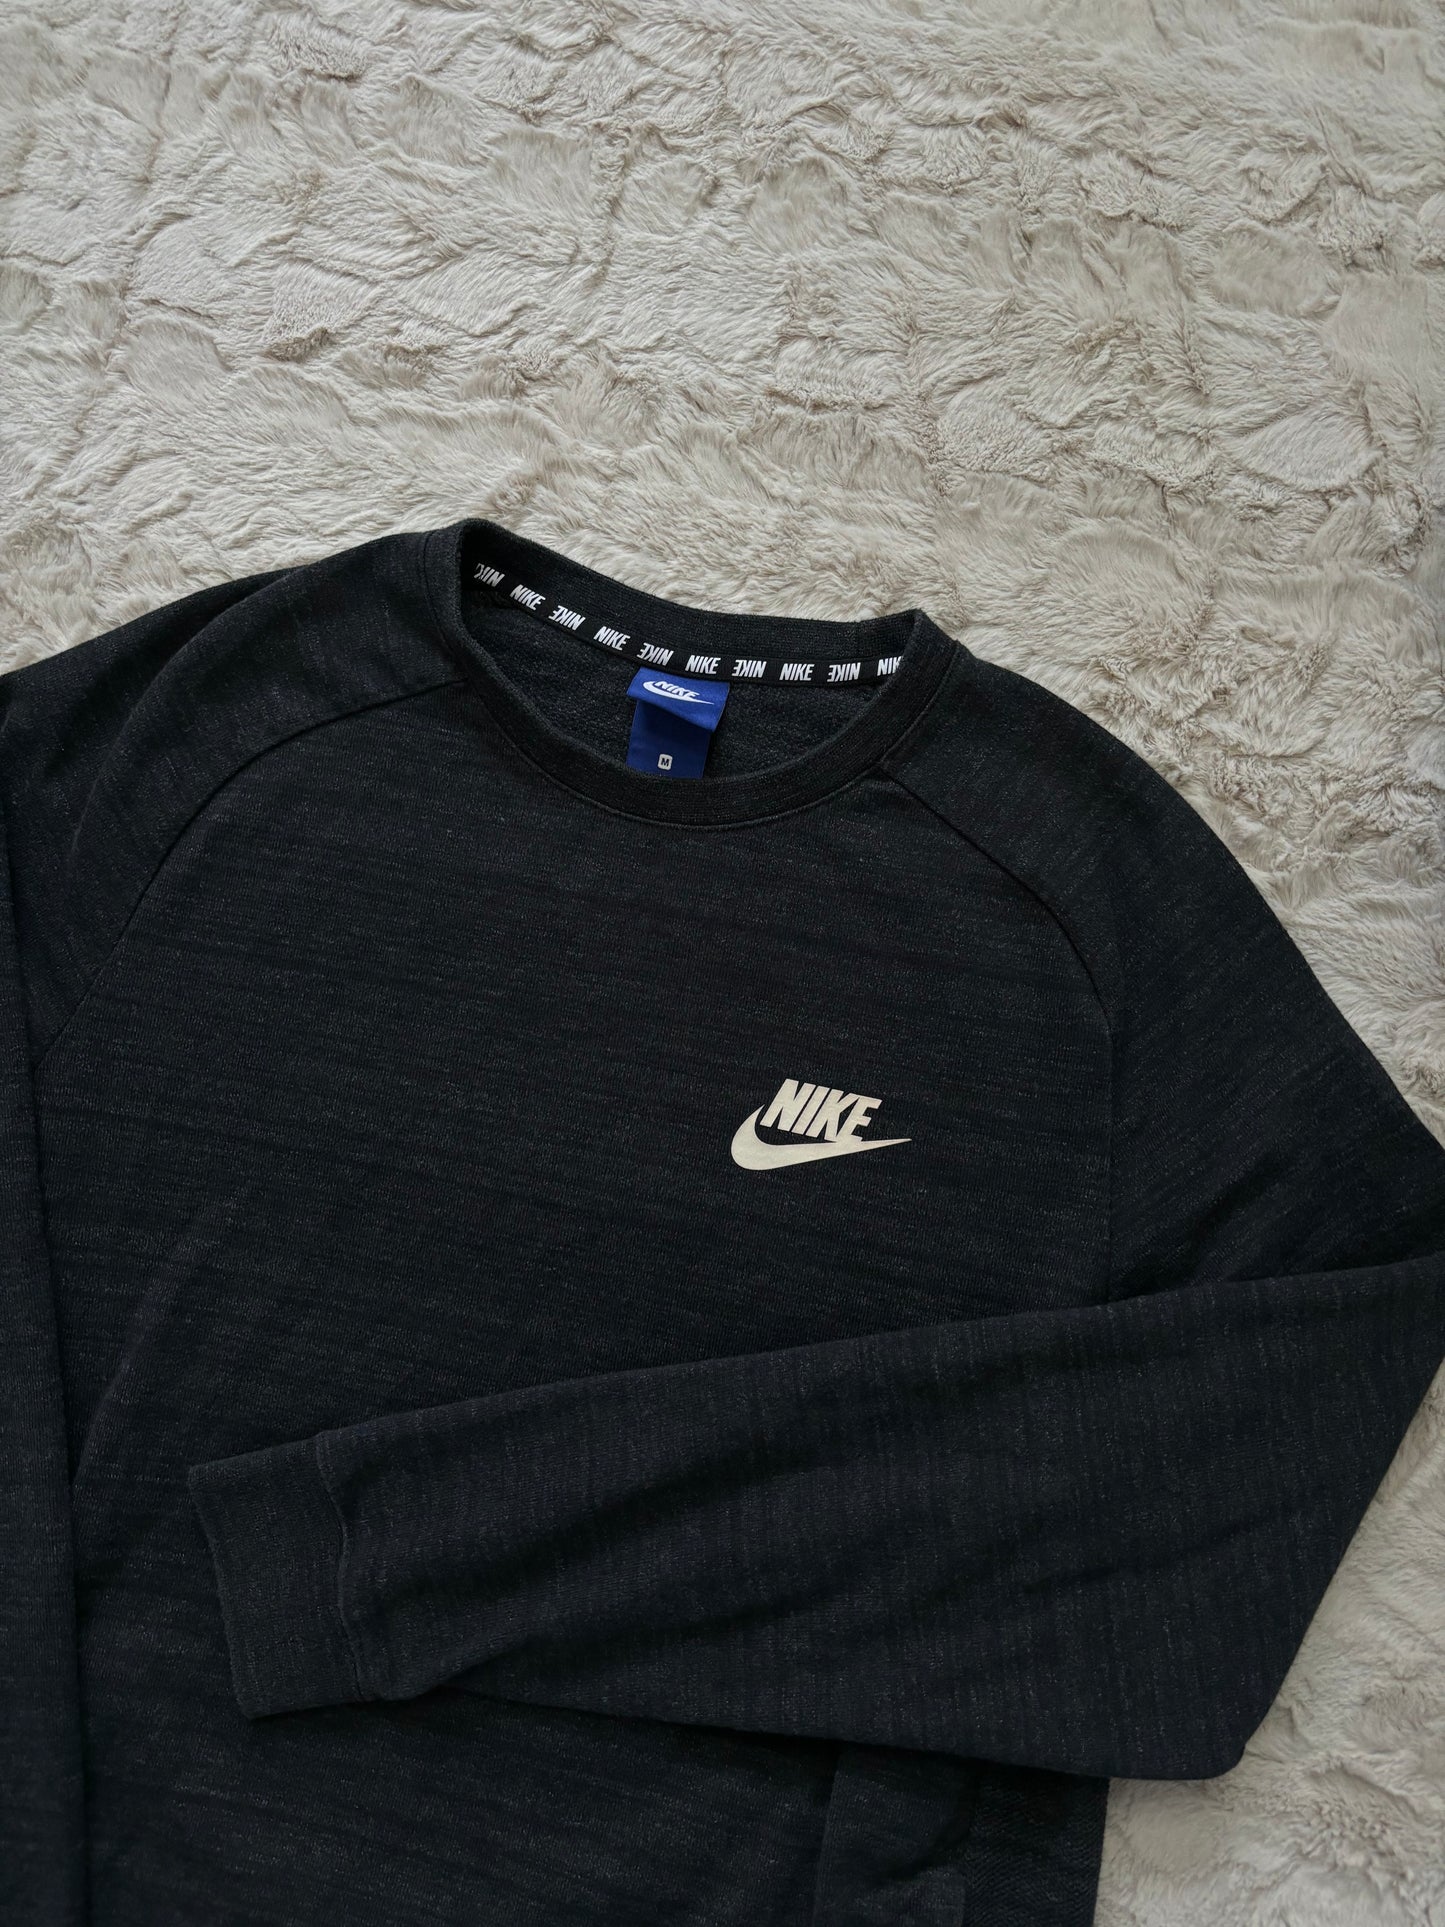 Nike Long Sleeve with Pockets